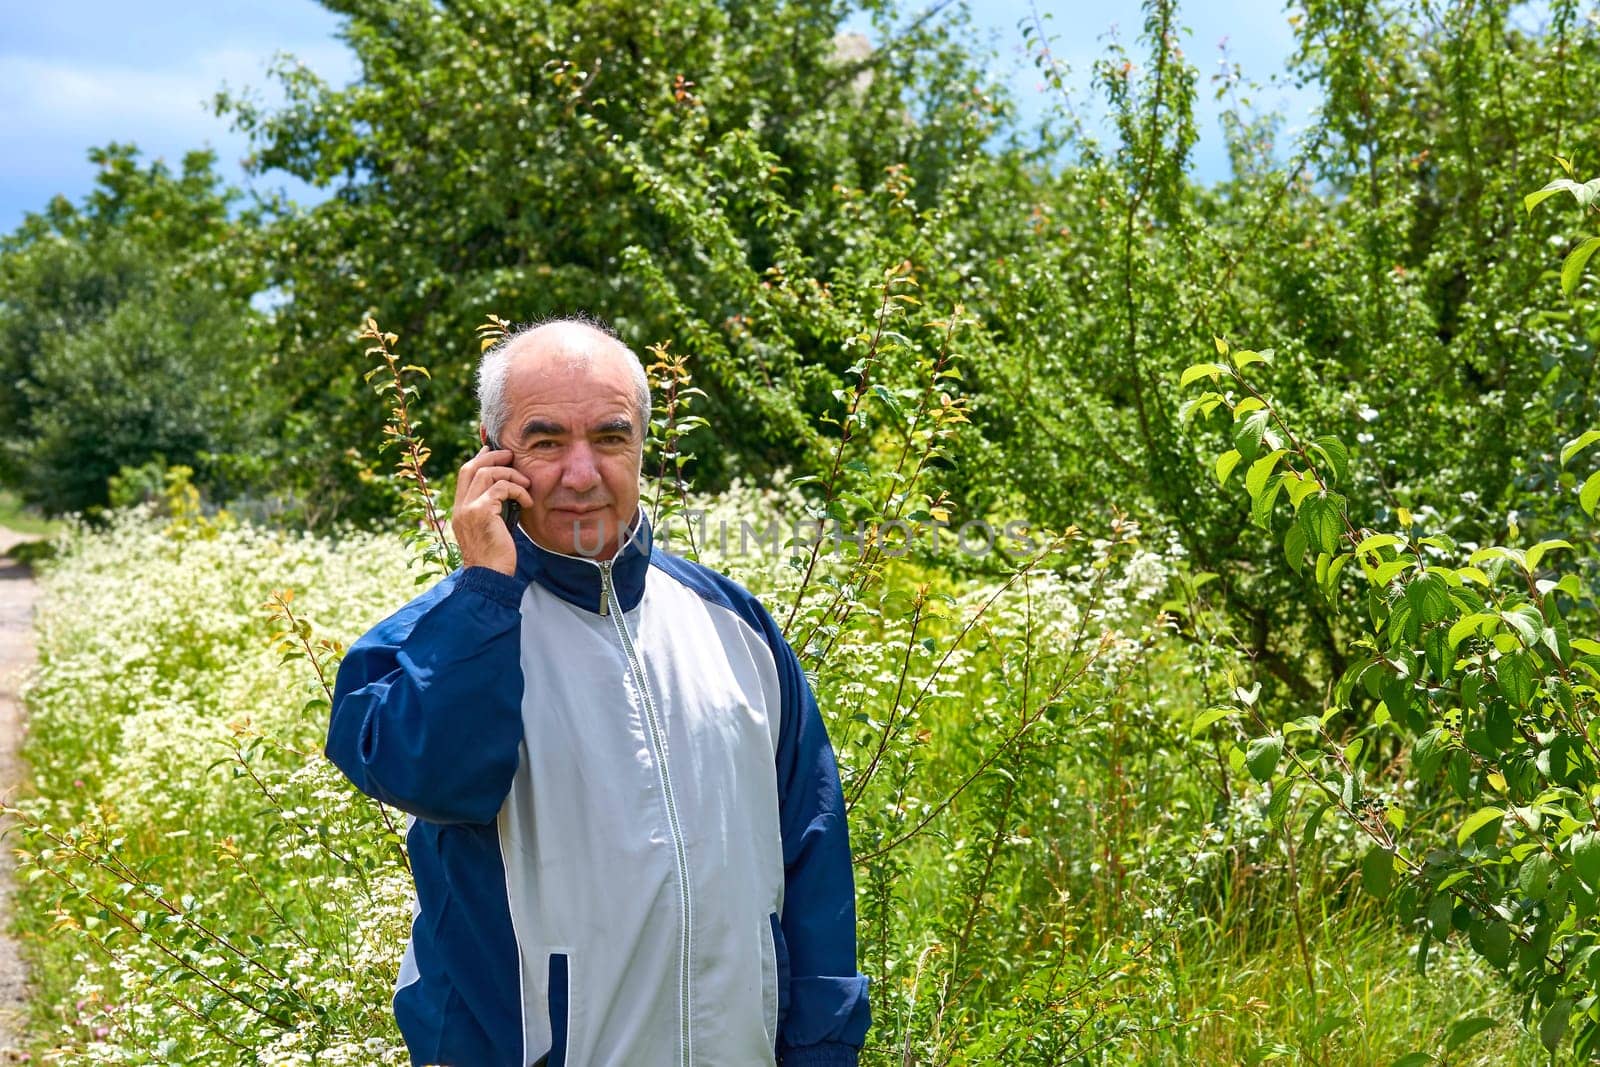 Elderly retired man walking talking on the phone in a august september garden by jovani68